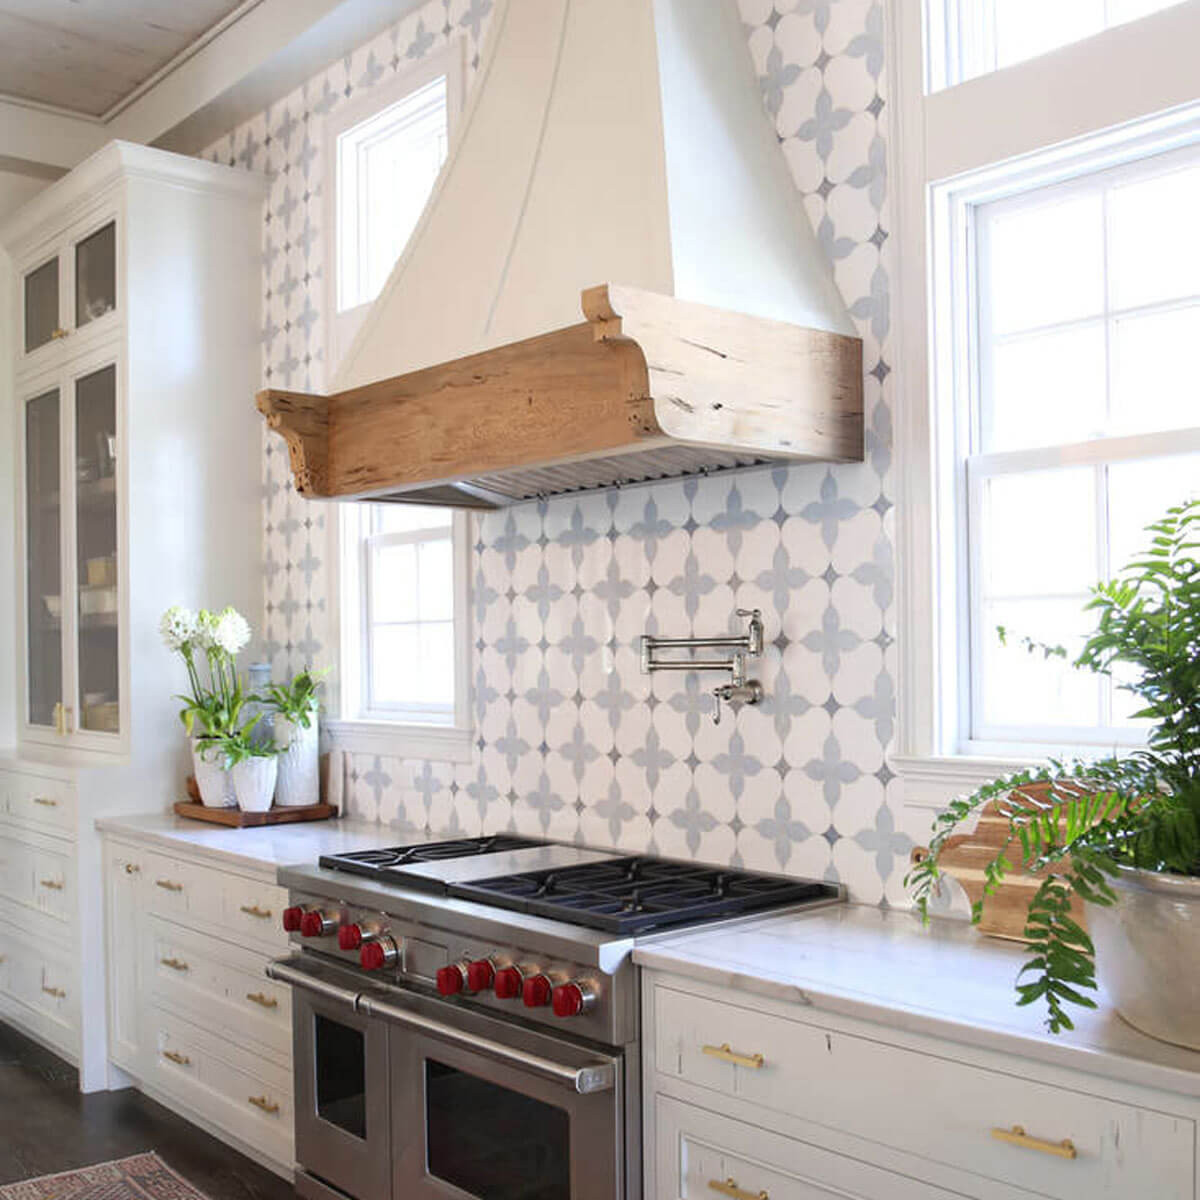 Tile Backsplash Ideas Kitchen
 Kitchen Tile Backsplash Ideas – Cost Design Installation